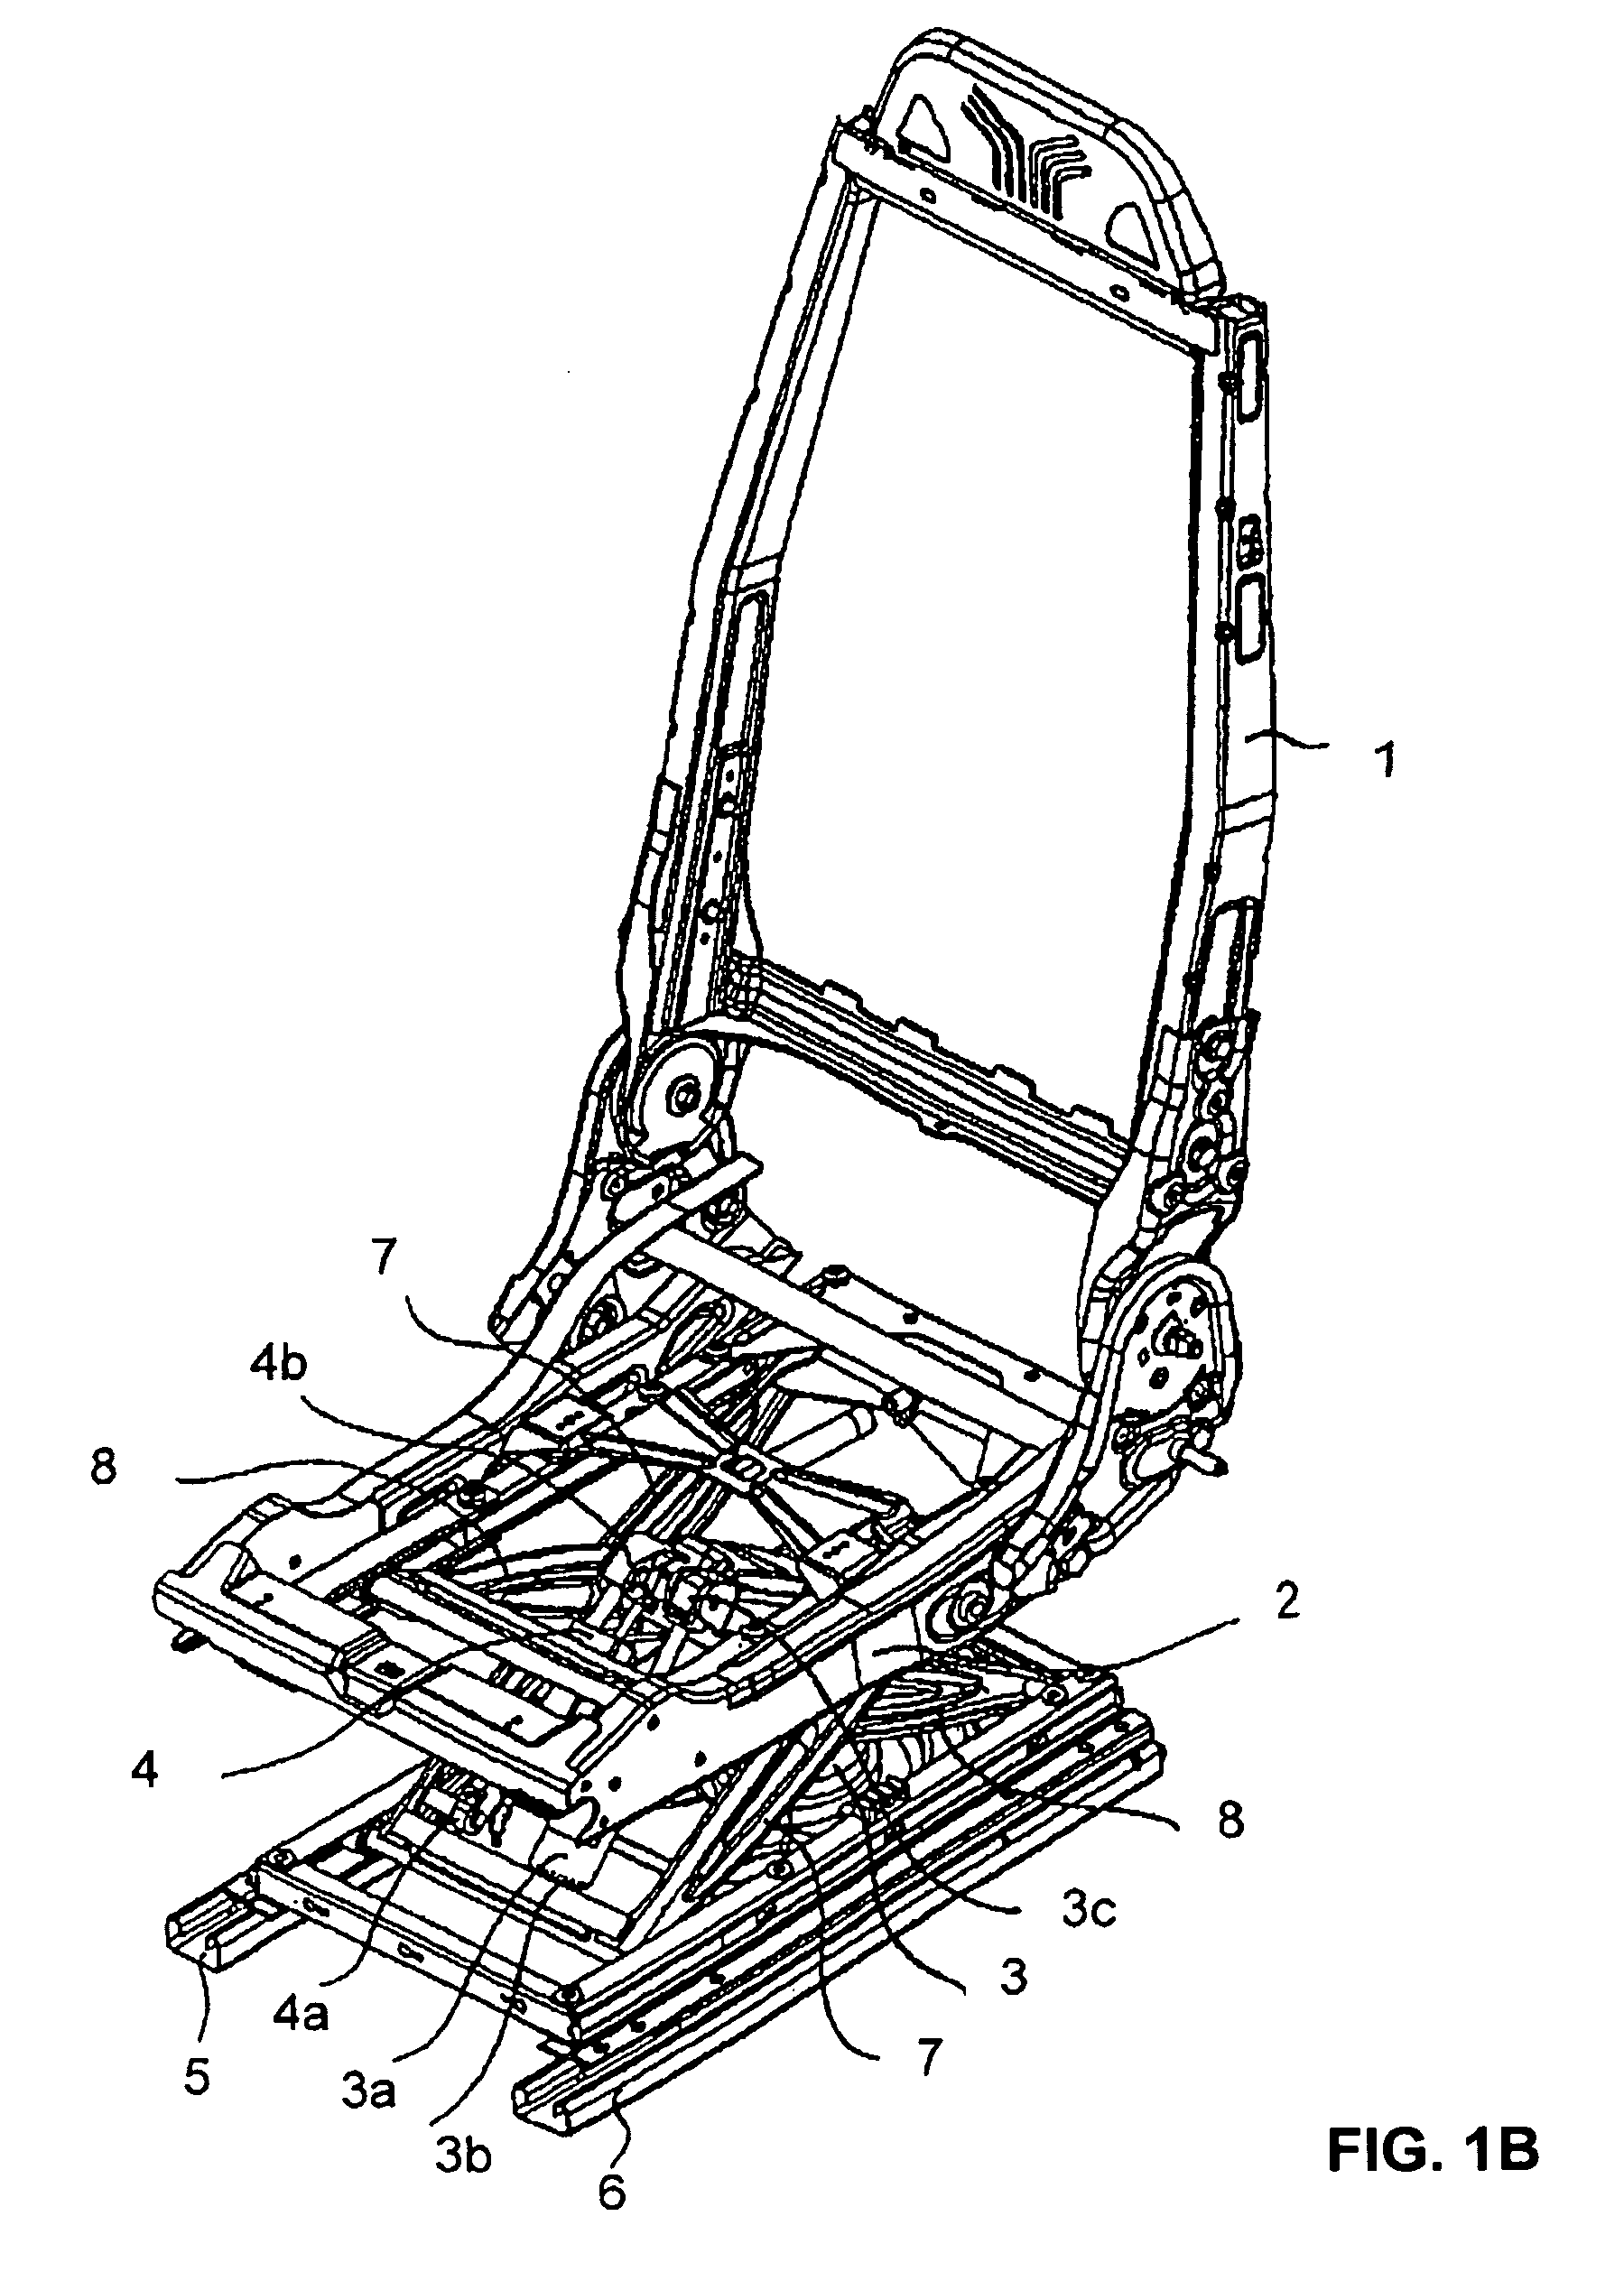 Vehicle seat with slide valve